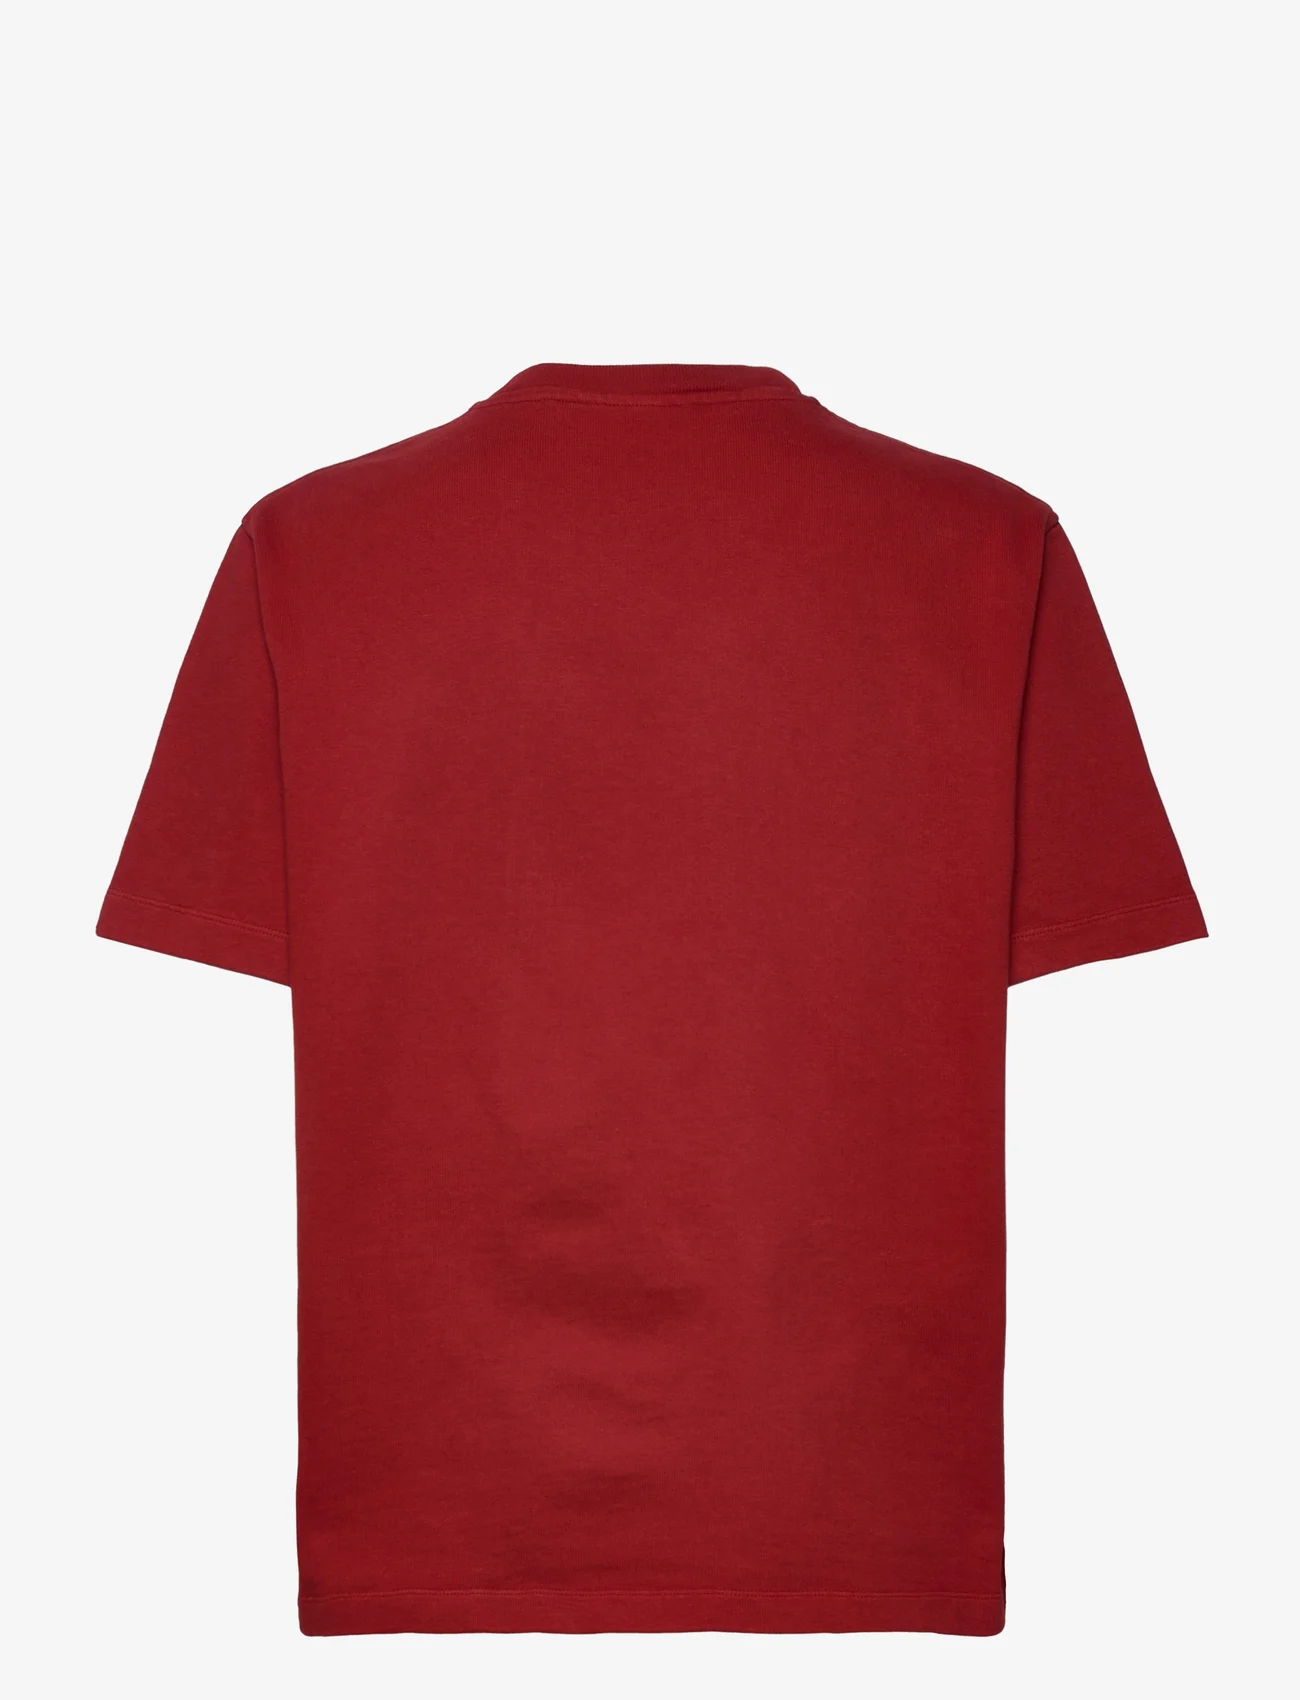 HOLZWEILER - Kjerag Oslo Tee - t-shirts & tops - red - 1